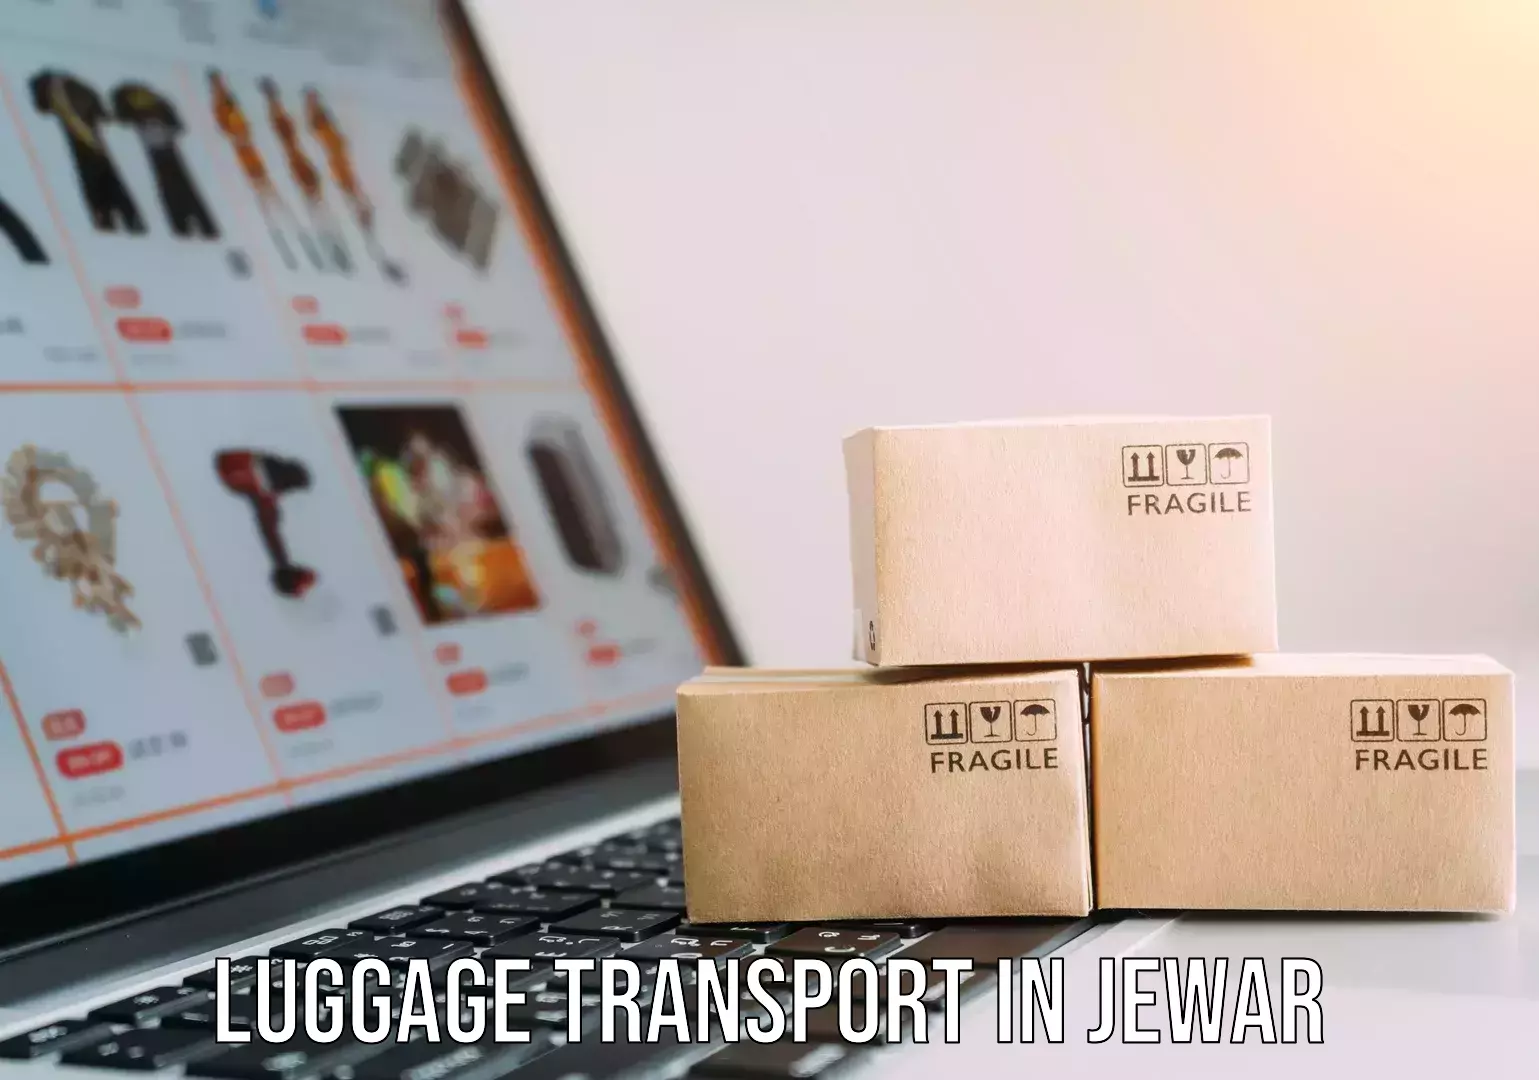 Luggage transport deals in Jewar